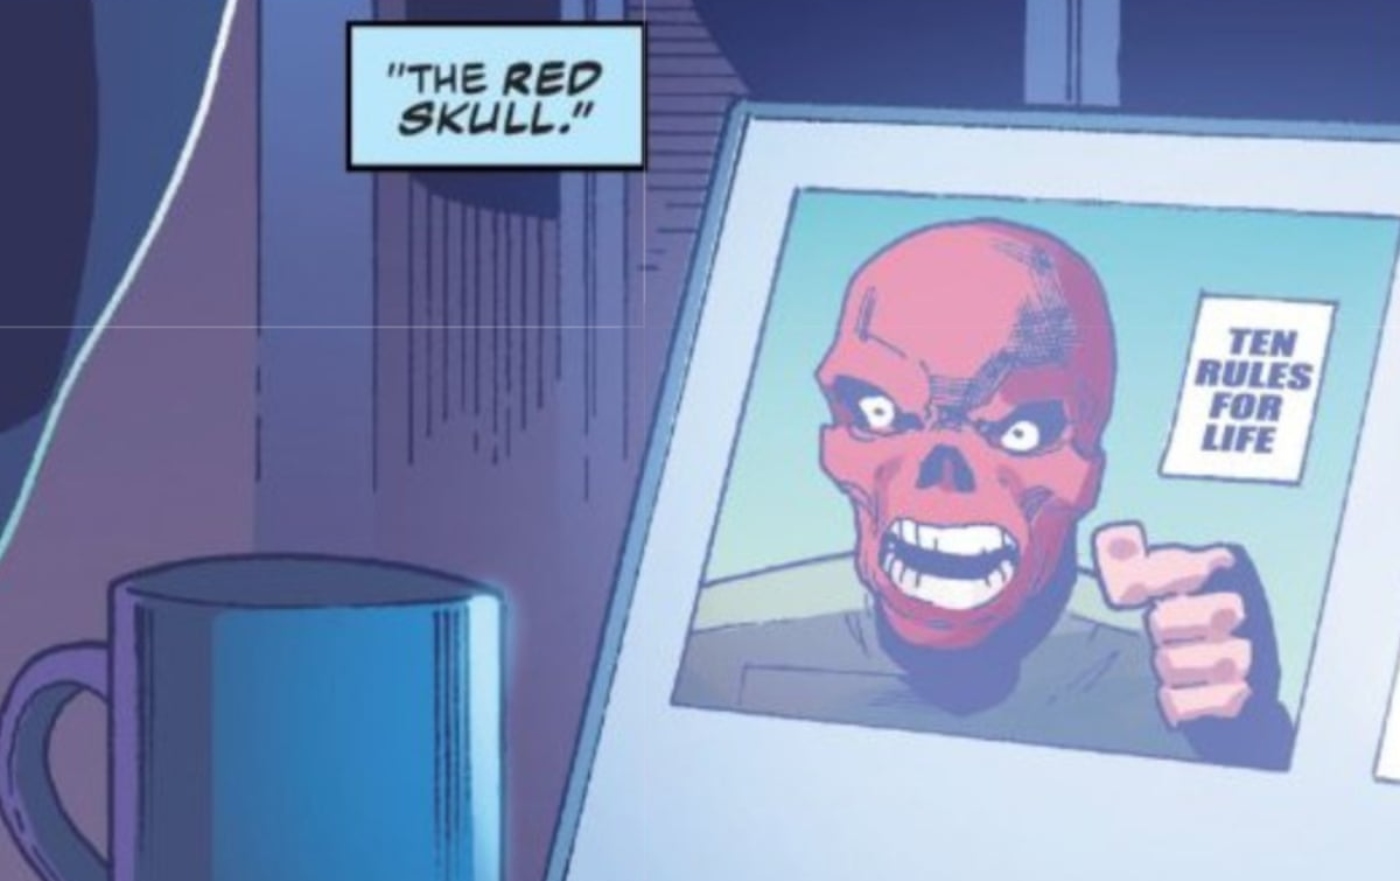 Jordan Peterson’s Red Skull adventure